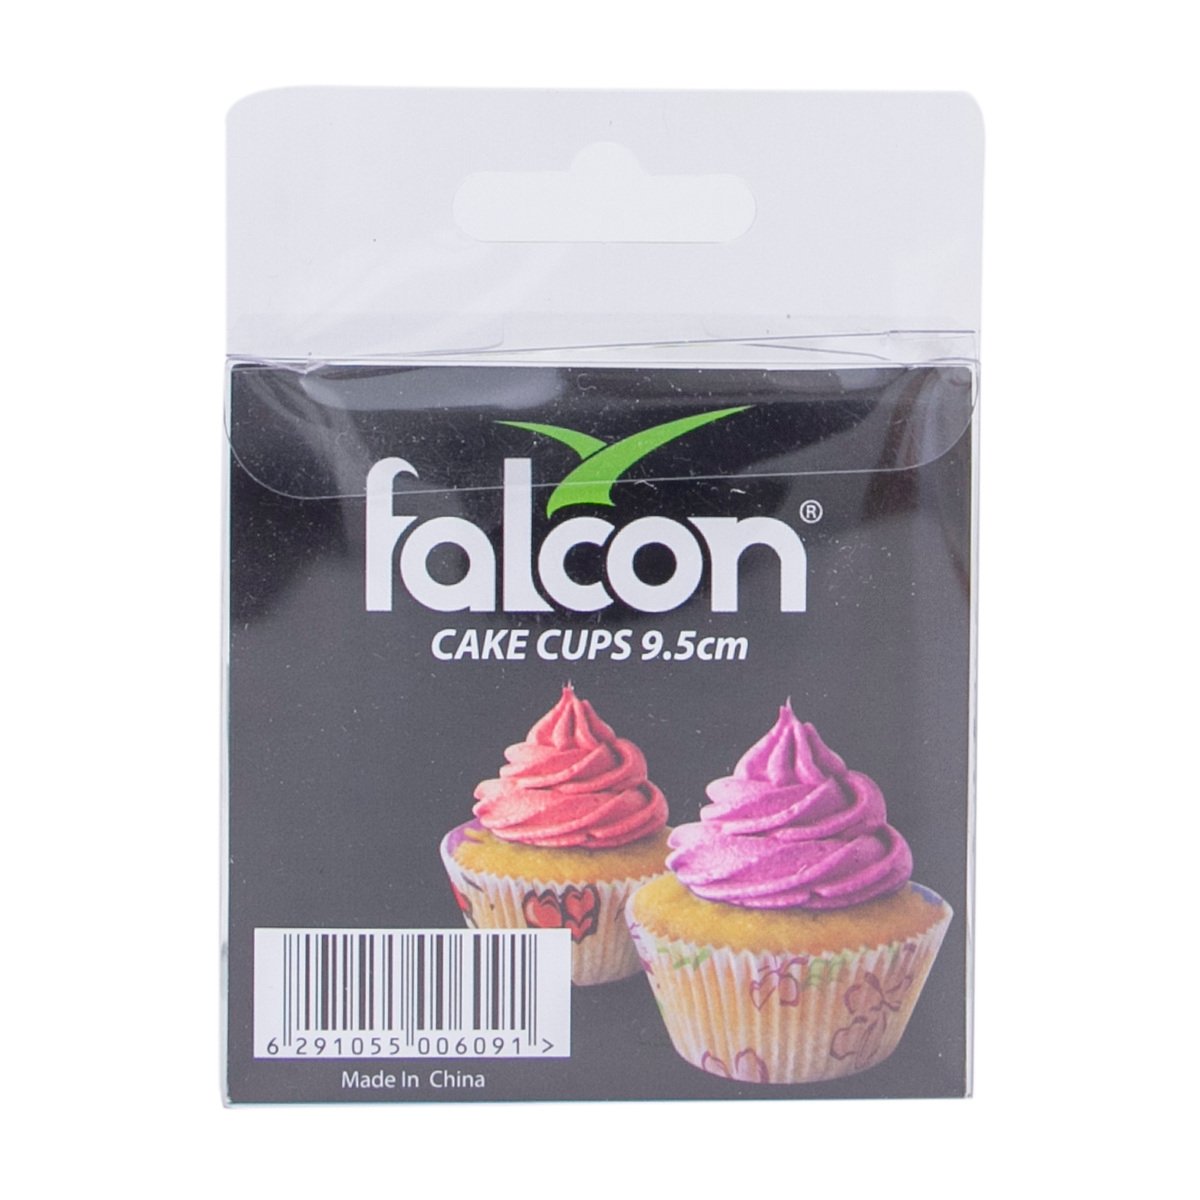 Falcon Cake Cups, 9.5 cm, 100 pcs